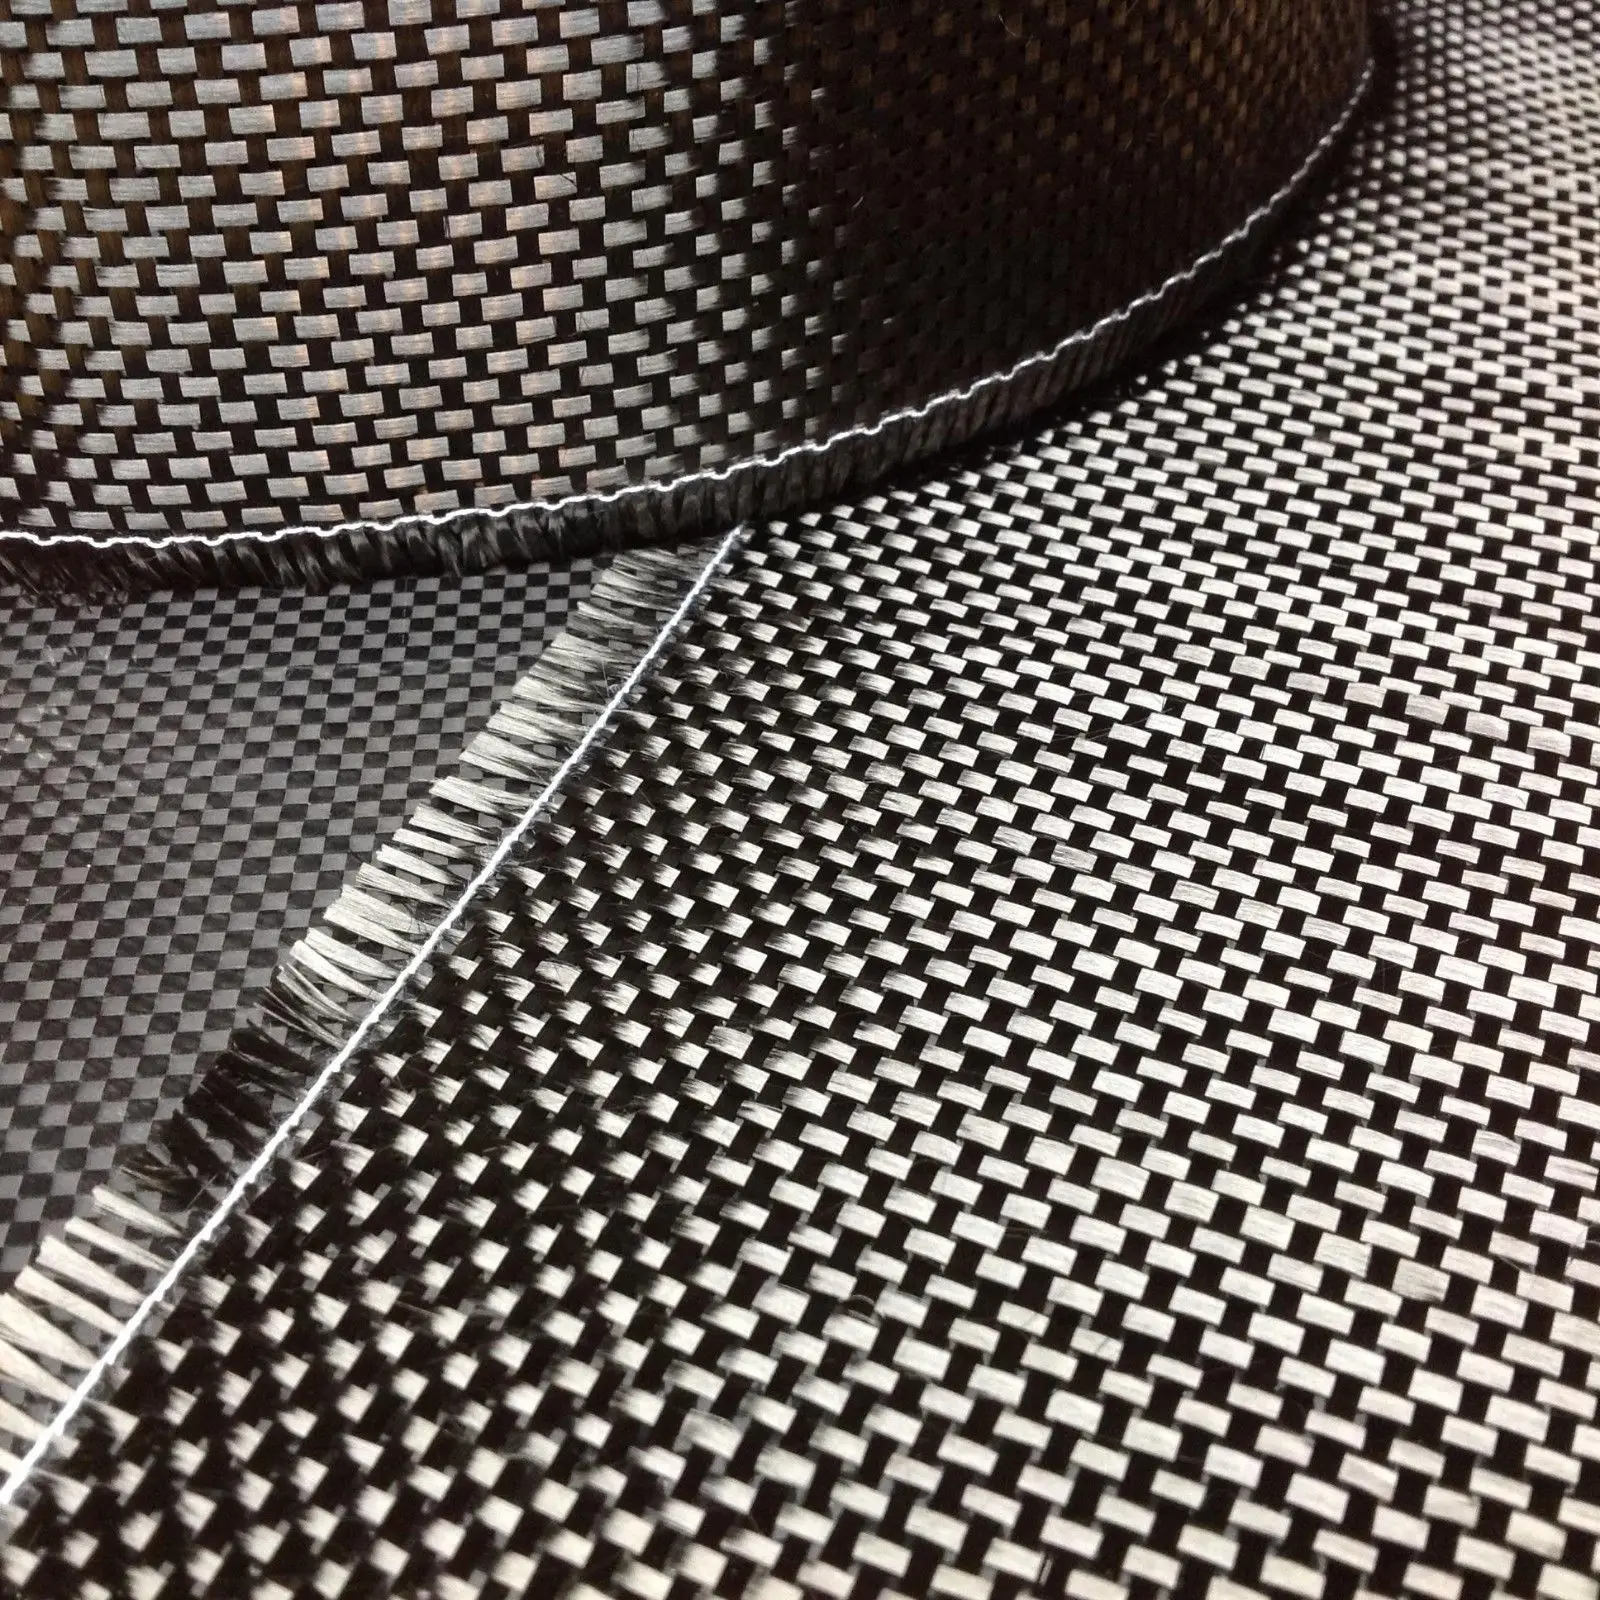 
Silicone Rubber Coated Black Fiberglass Cloth 